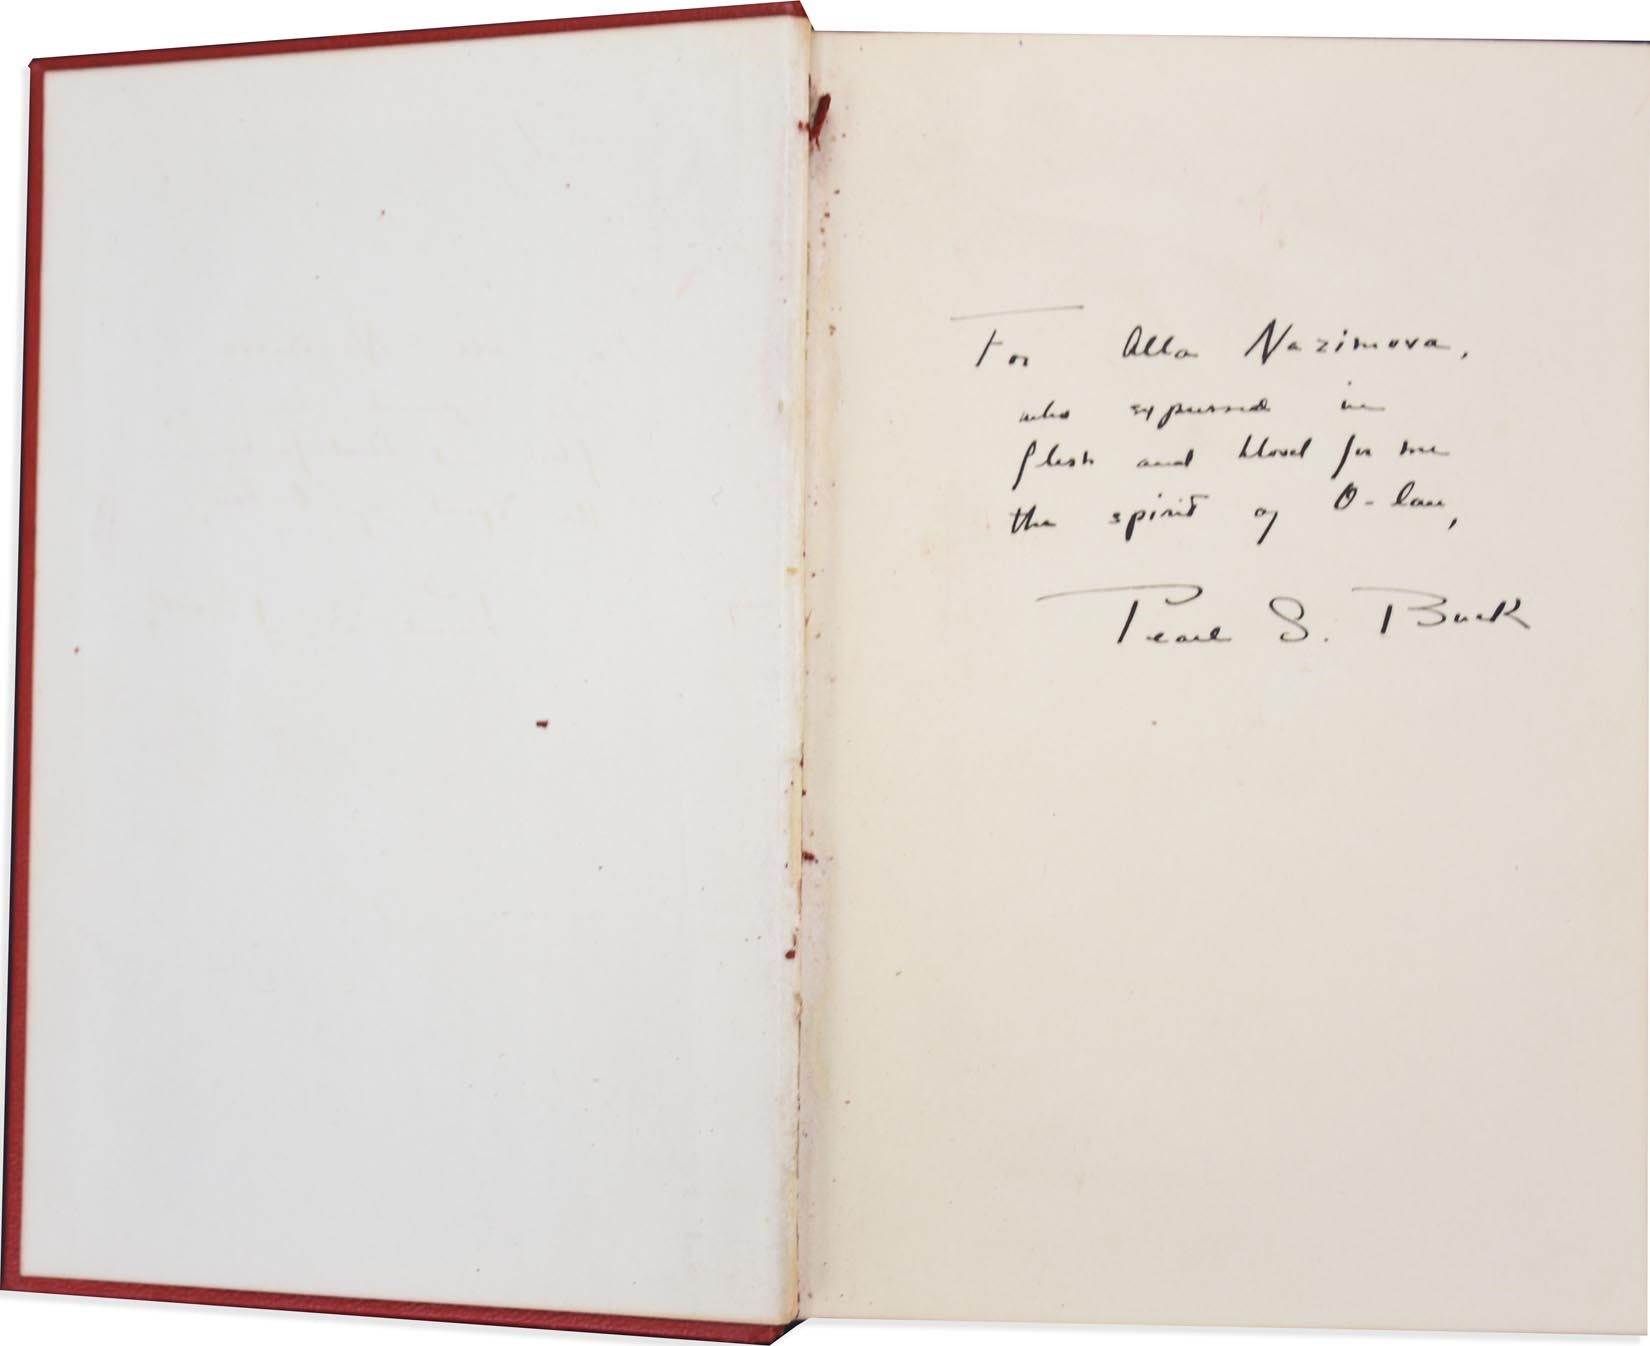 1932 "The Good Earth" Transcribed by Pearl S. Buck to Alla Nazimova